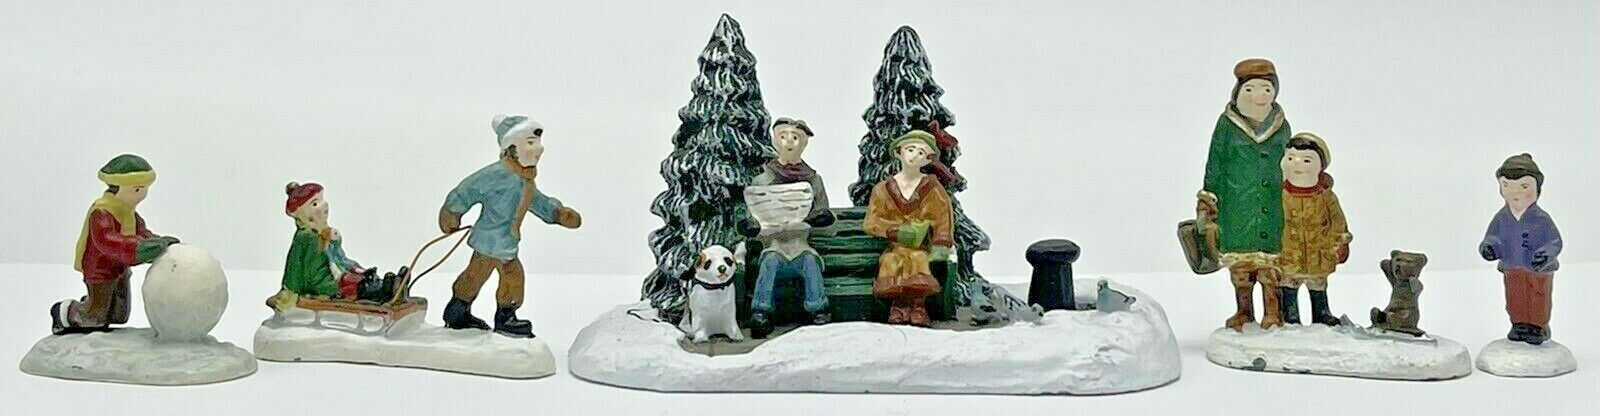 Hawthorne Village 2001 Christmas Figurine Set 91214 Feeding Birds Sled